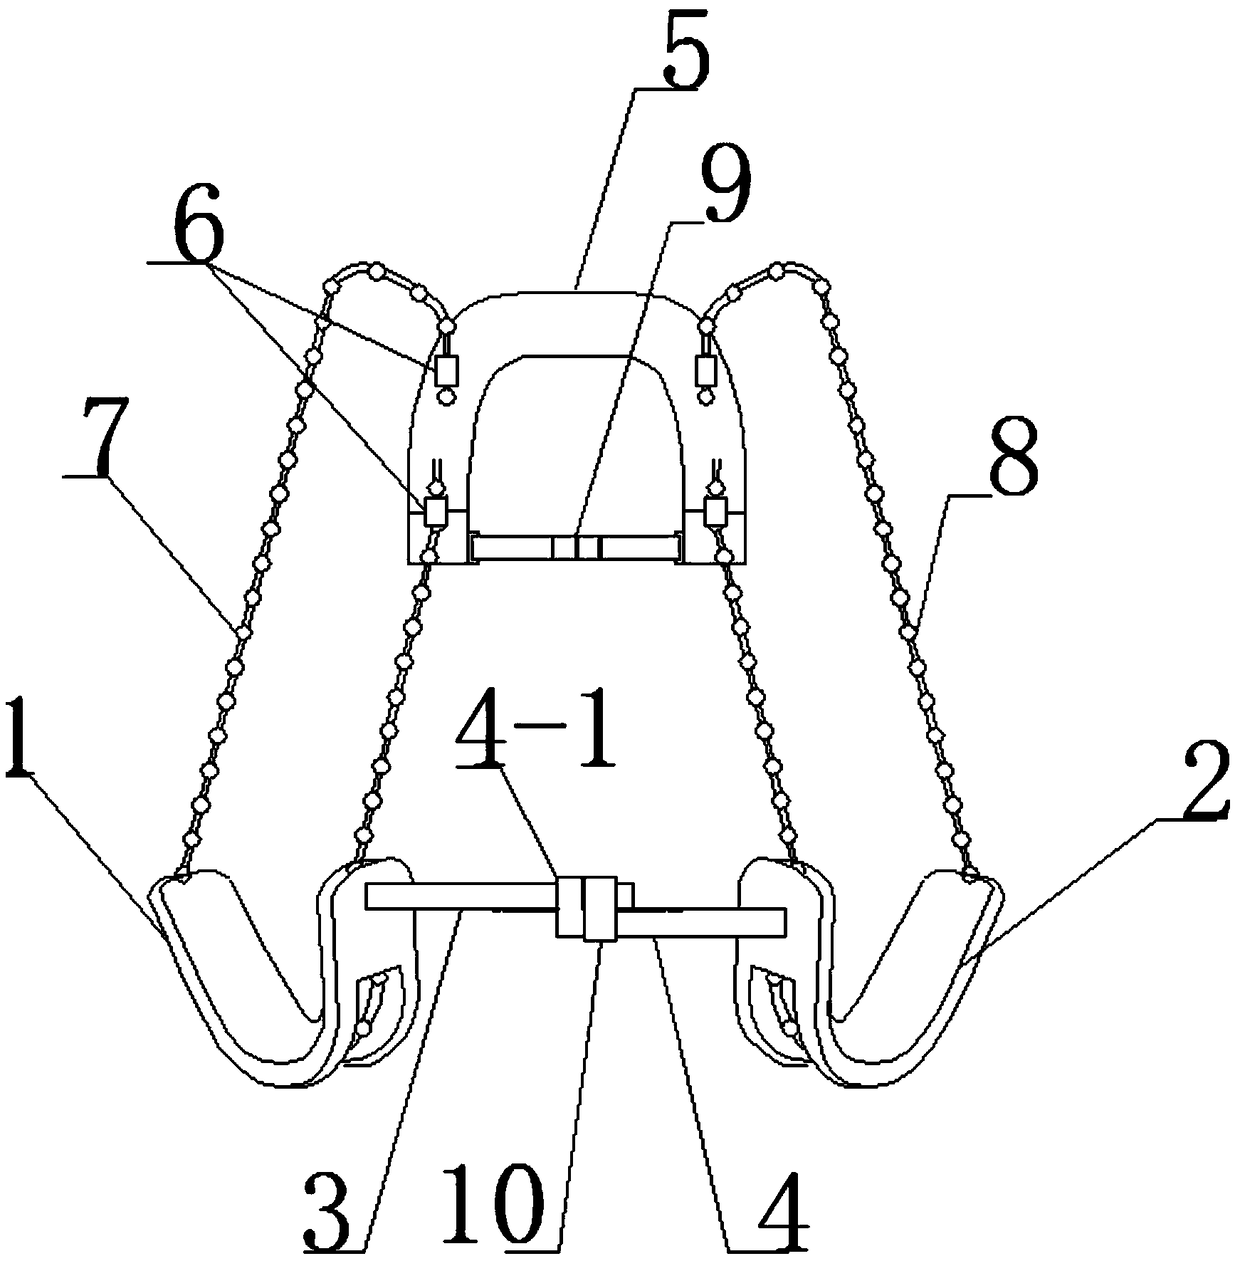 Orthopedic harness used for treating acetabular dysplasia of infants